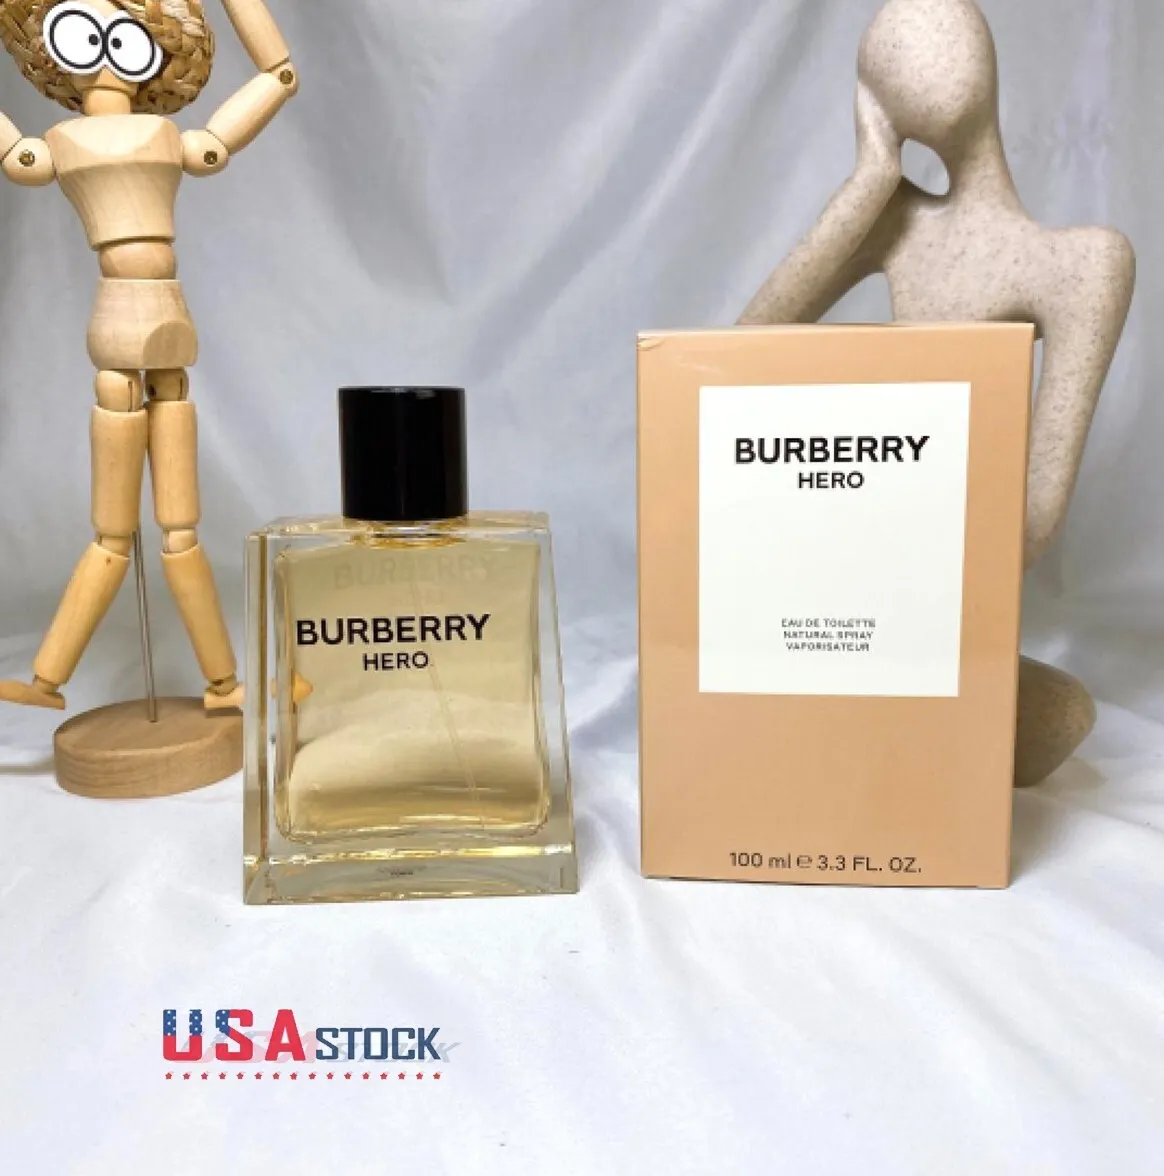 BURBERRY HERO by Burberry 3.3 OZ/100ml EAU DE TOILETTE SPARY NEW IN BOX